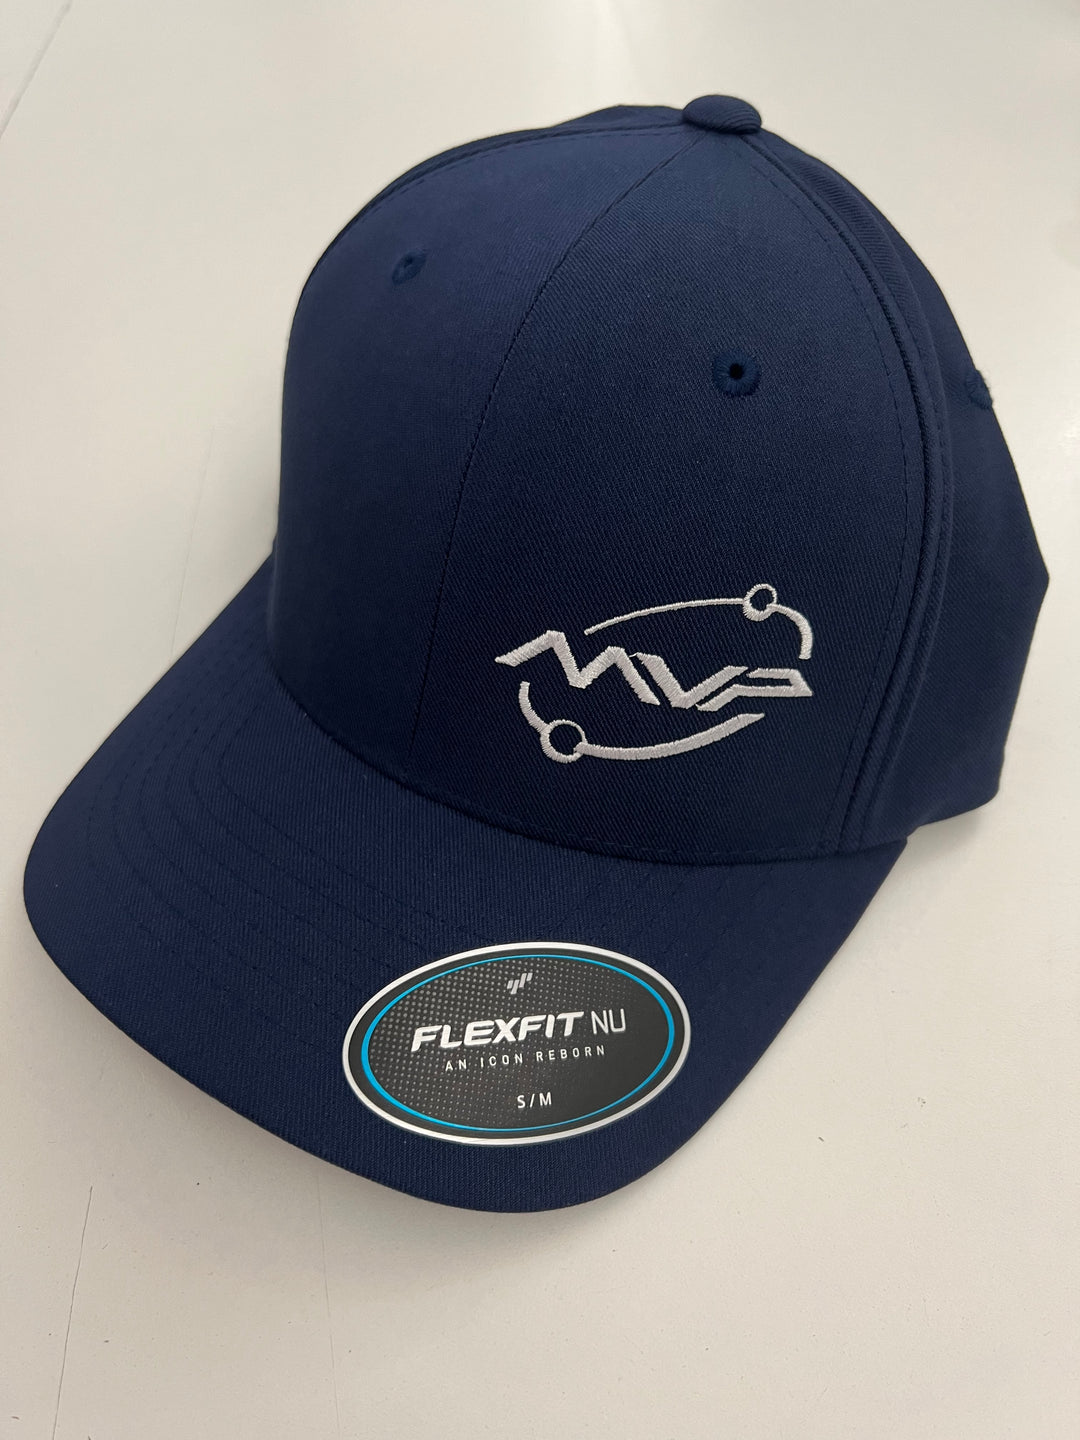 MVP Flexfit Nu Hat Blue